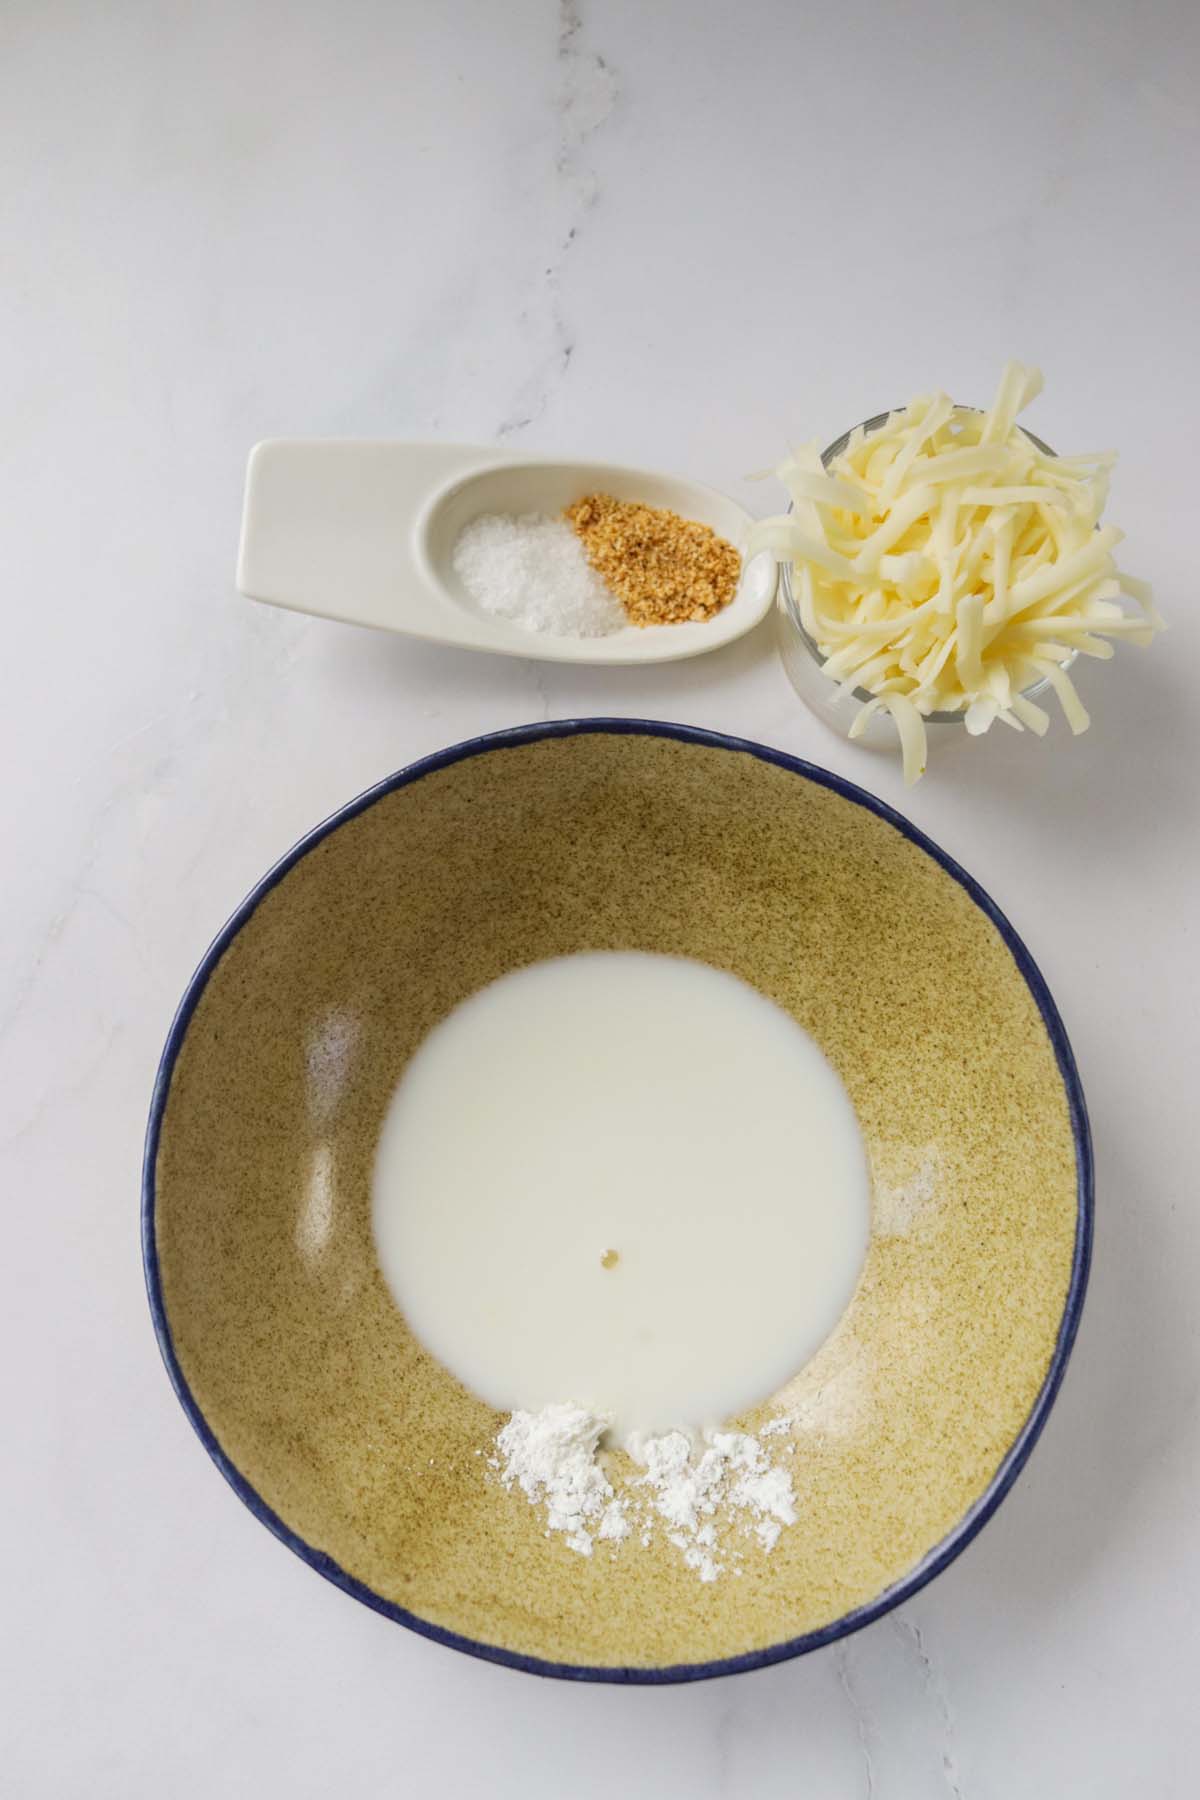 Milk and cornstarch in a bowl.